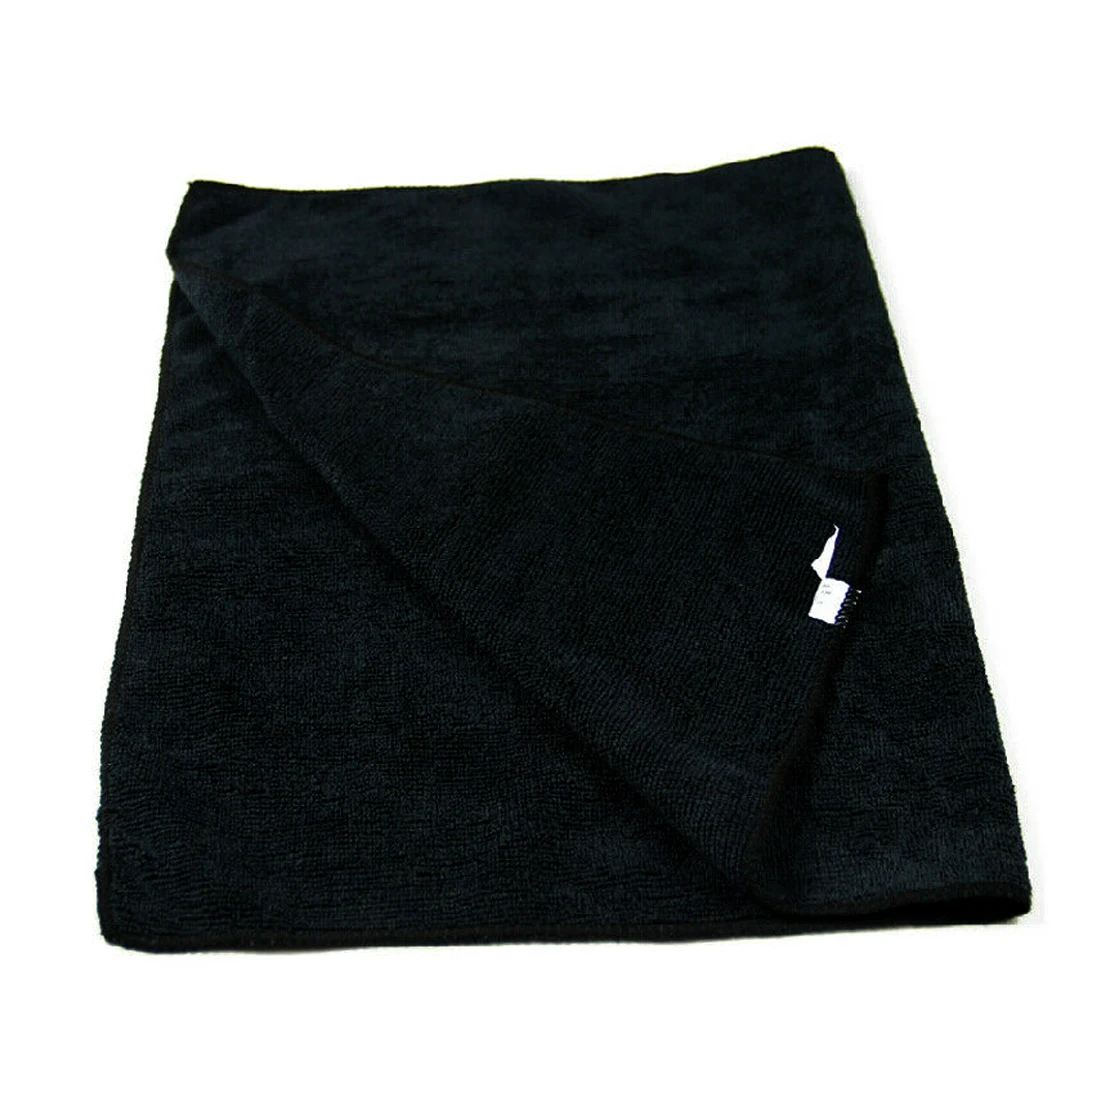 LETAOSK-paño de microfibra negro para limpieza, paño de toalla para lavado, secado, pulido, pantalla de ventana, 30x30cm, 10 unidades por juego